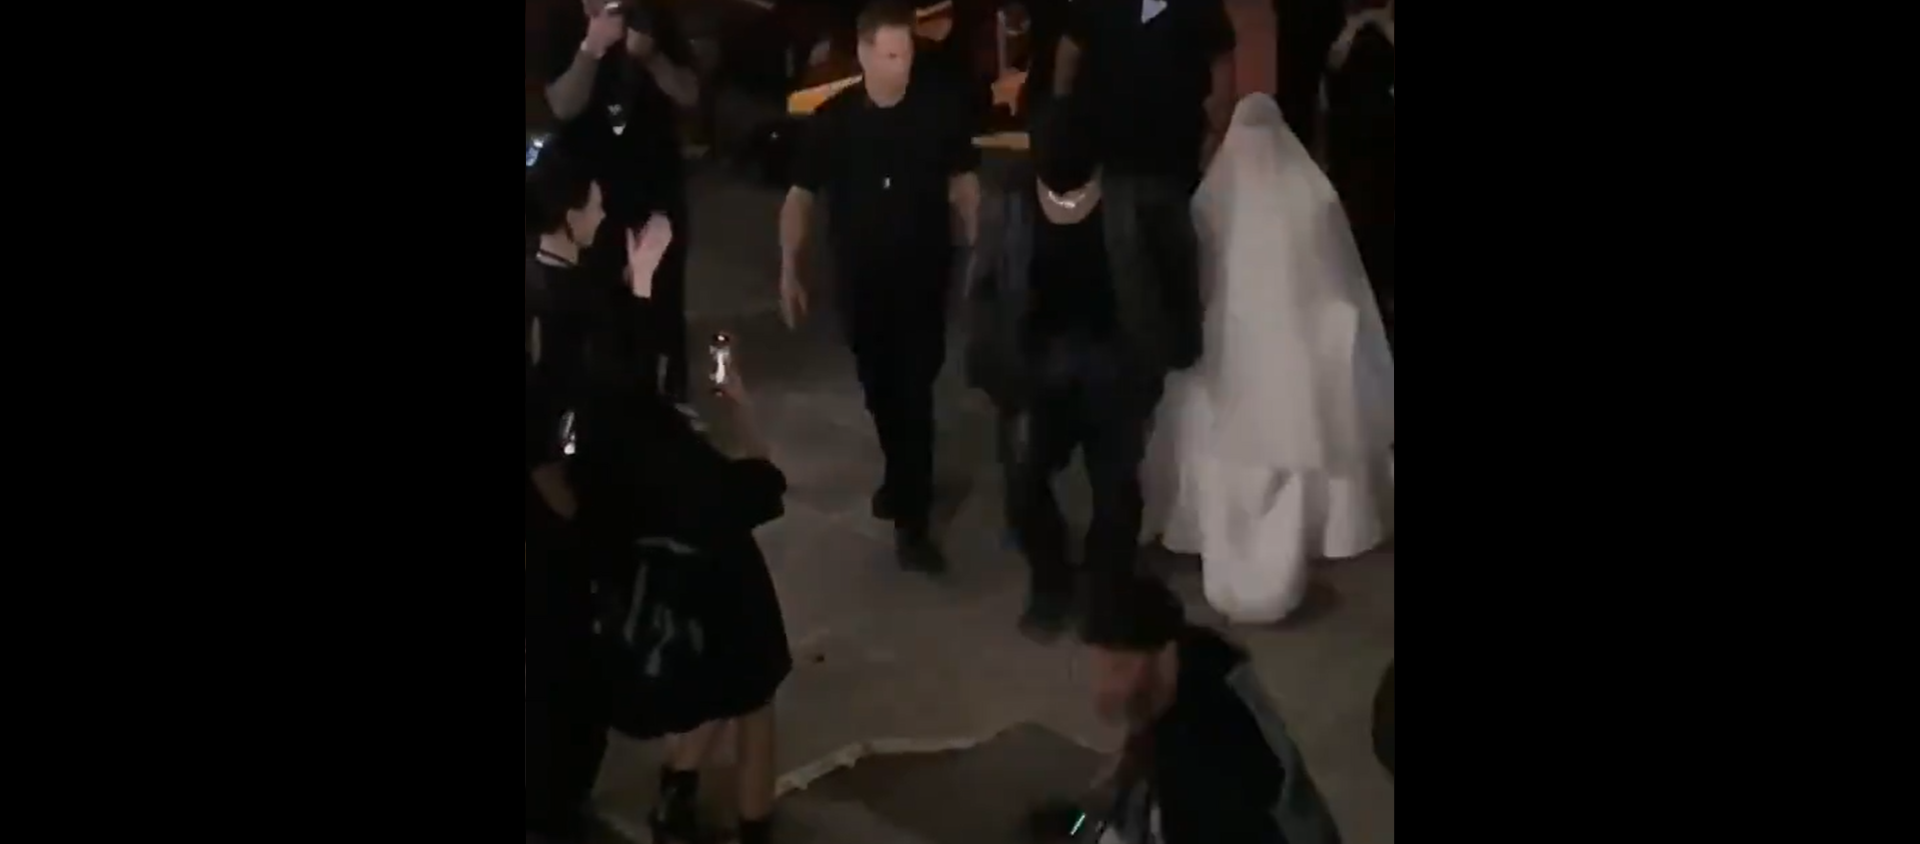 Screenshot from a video showing Kanye West and Kim Kardashian walking together after the Donda listening event - Sputnik International, 1920, 28.08.2021